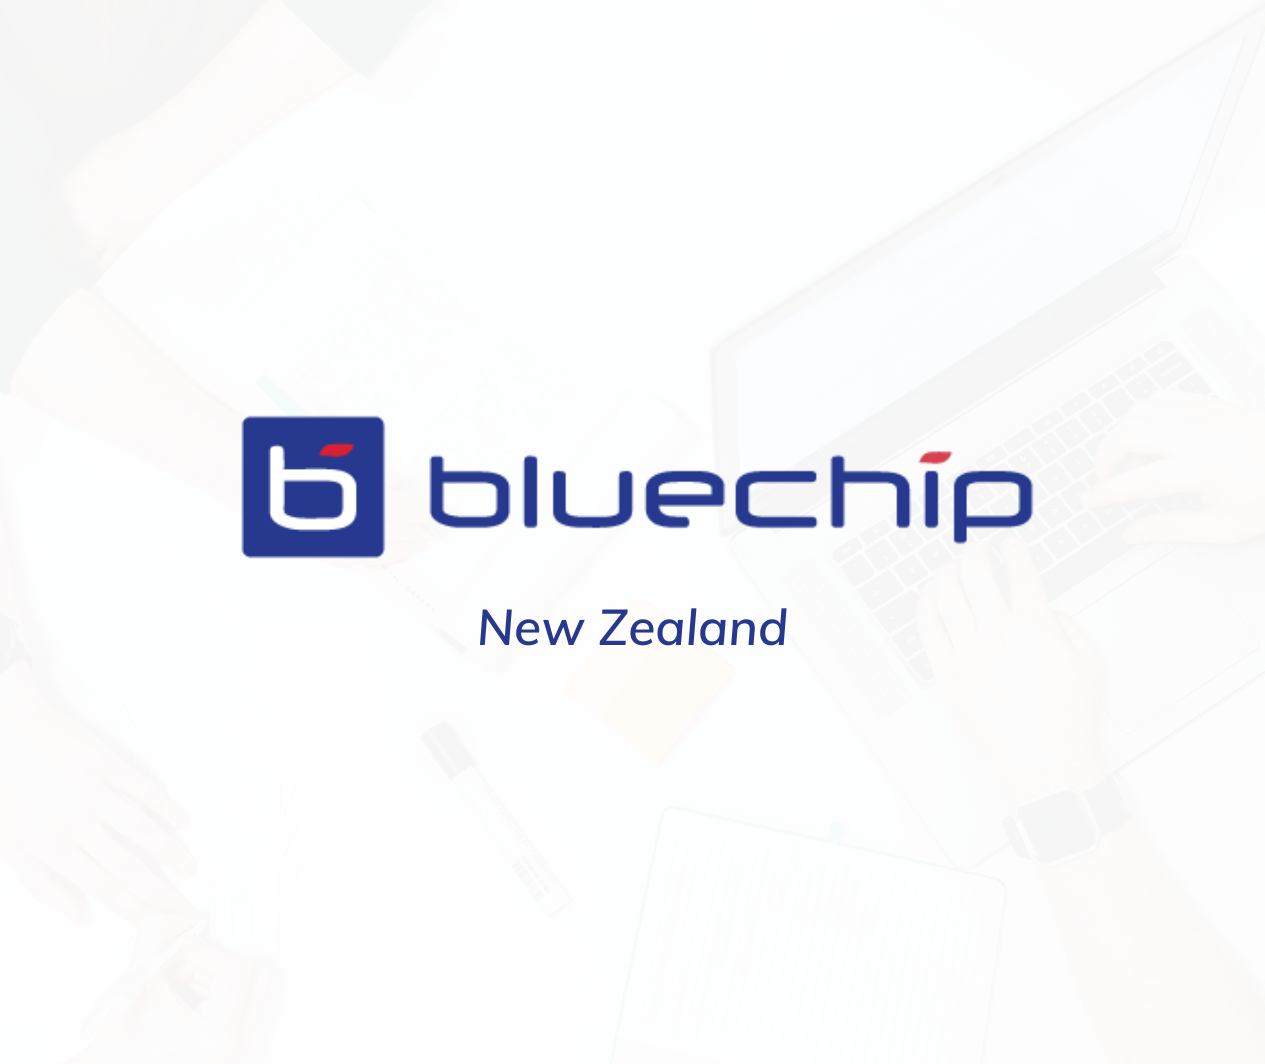 Bluechip New Zealand